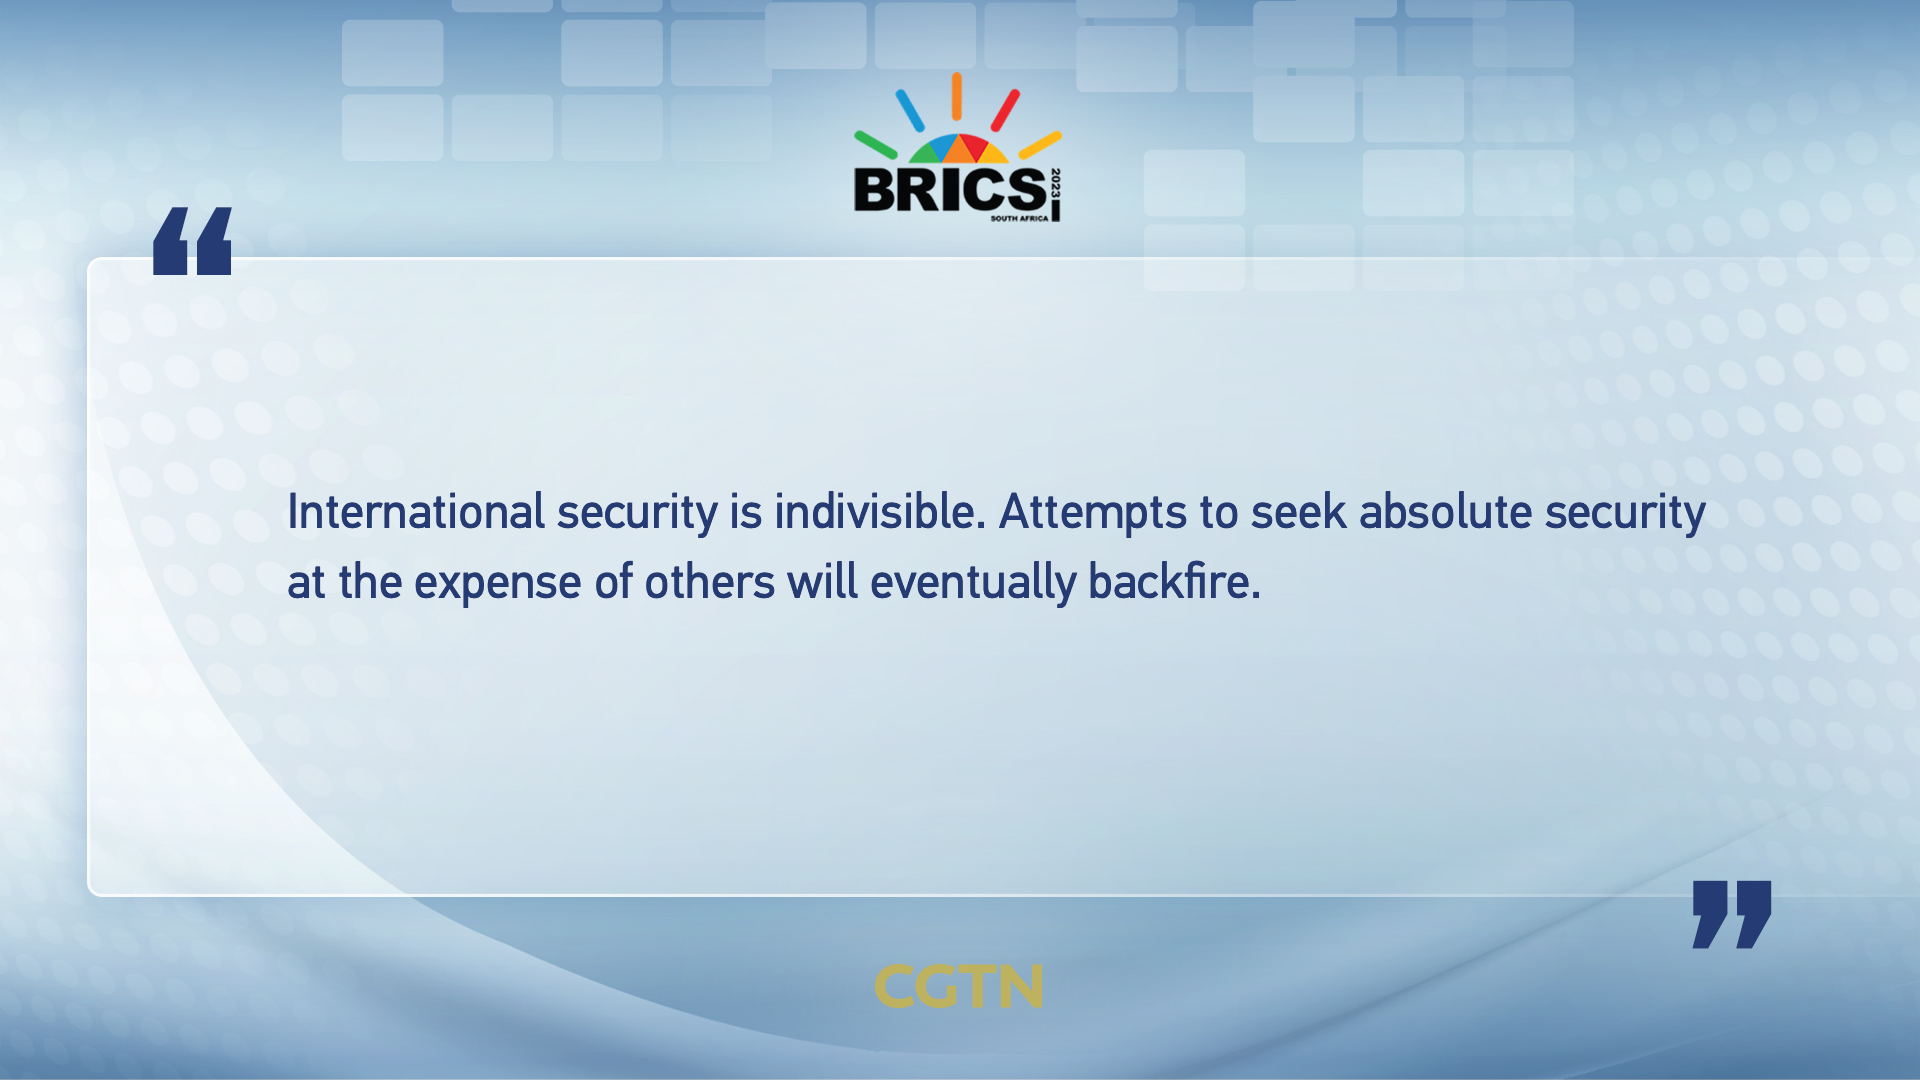 Xi Jinping's key quotes at the 15th BRICS Summit